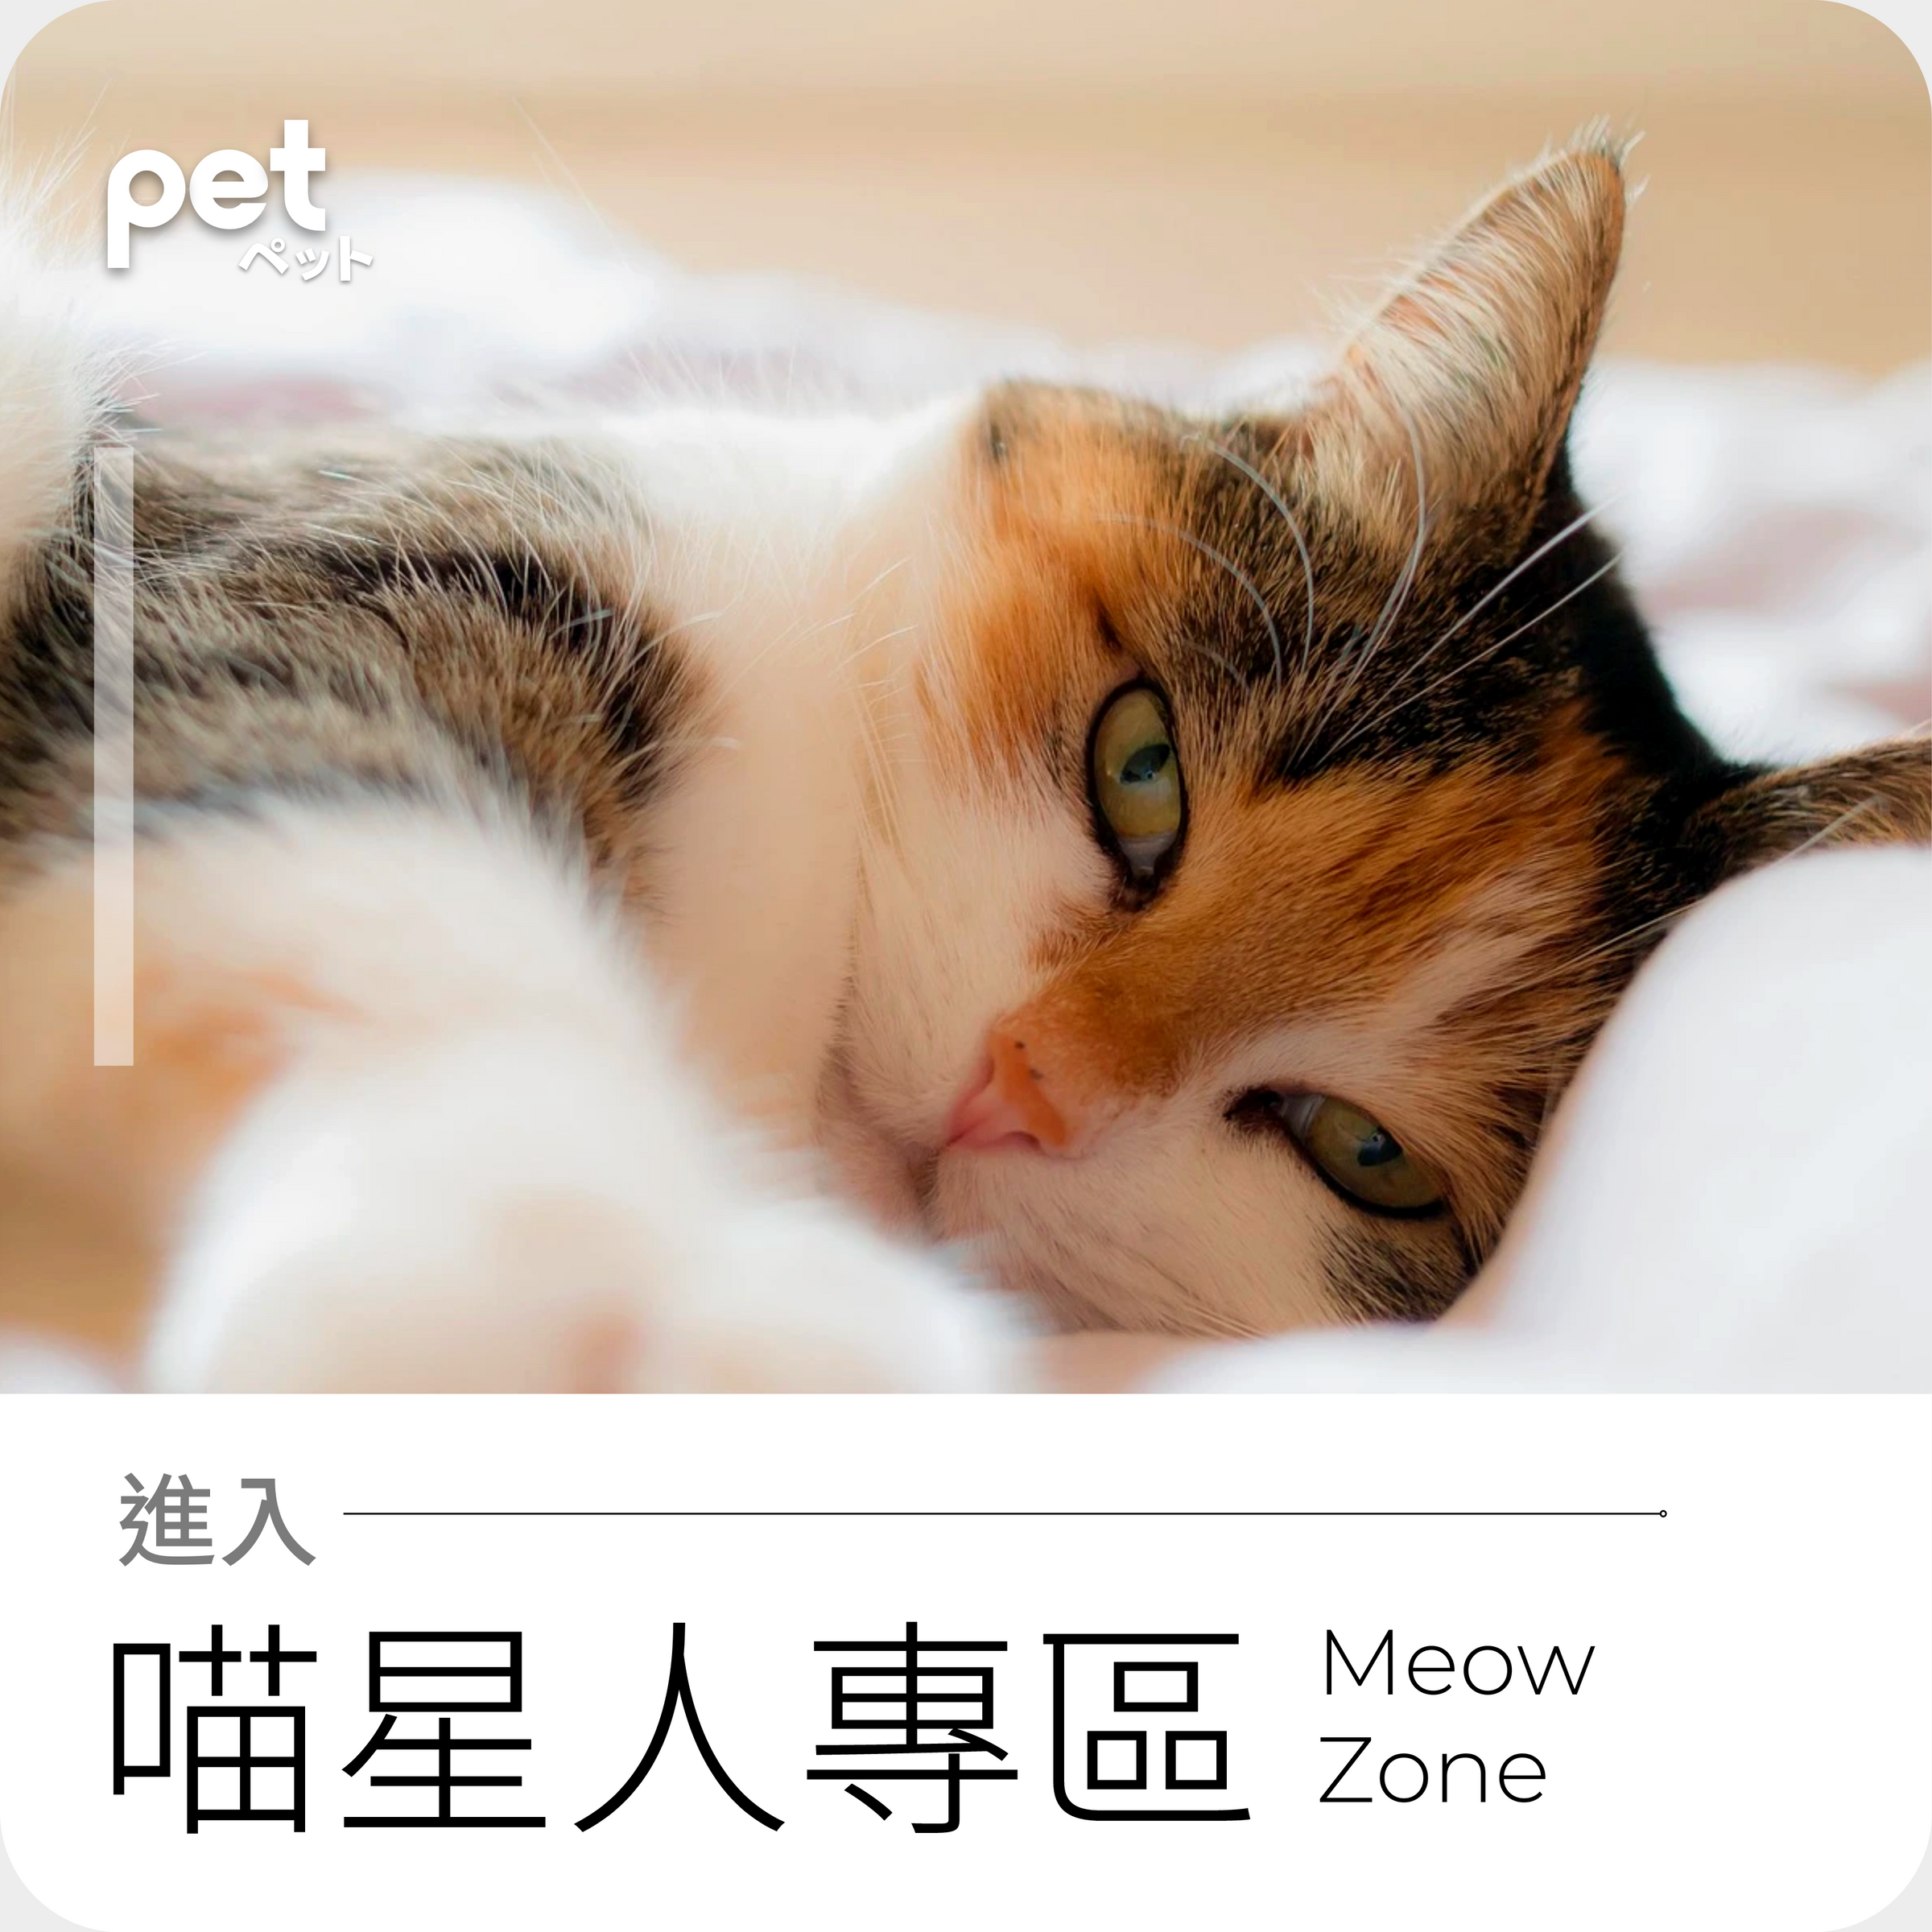 pet hk 貓貓 寵物 貓 食品 糧食 零食 mid levels edition 半山店